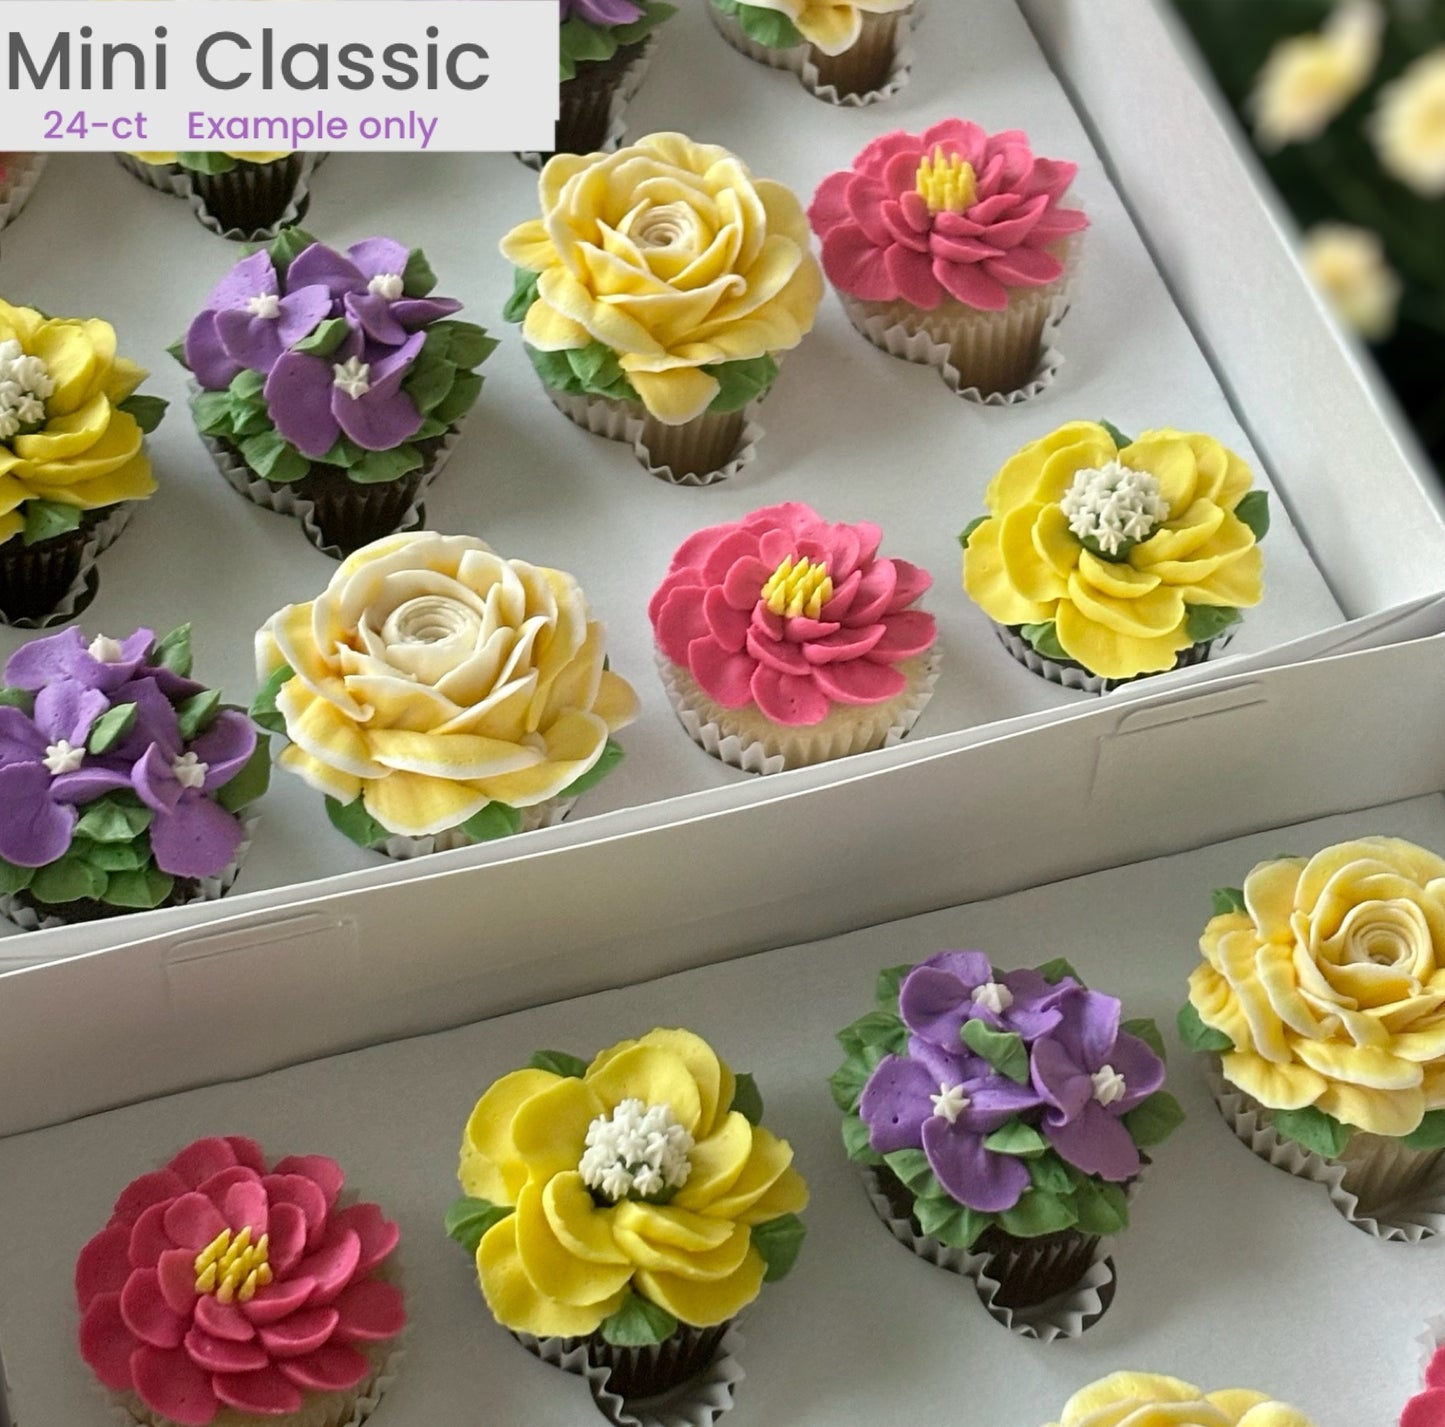 Florals MINI Boxed 24-Count - CLASSIC